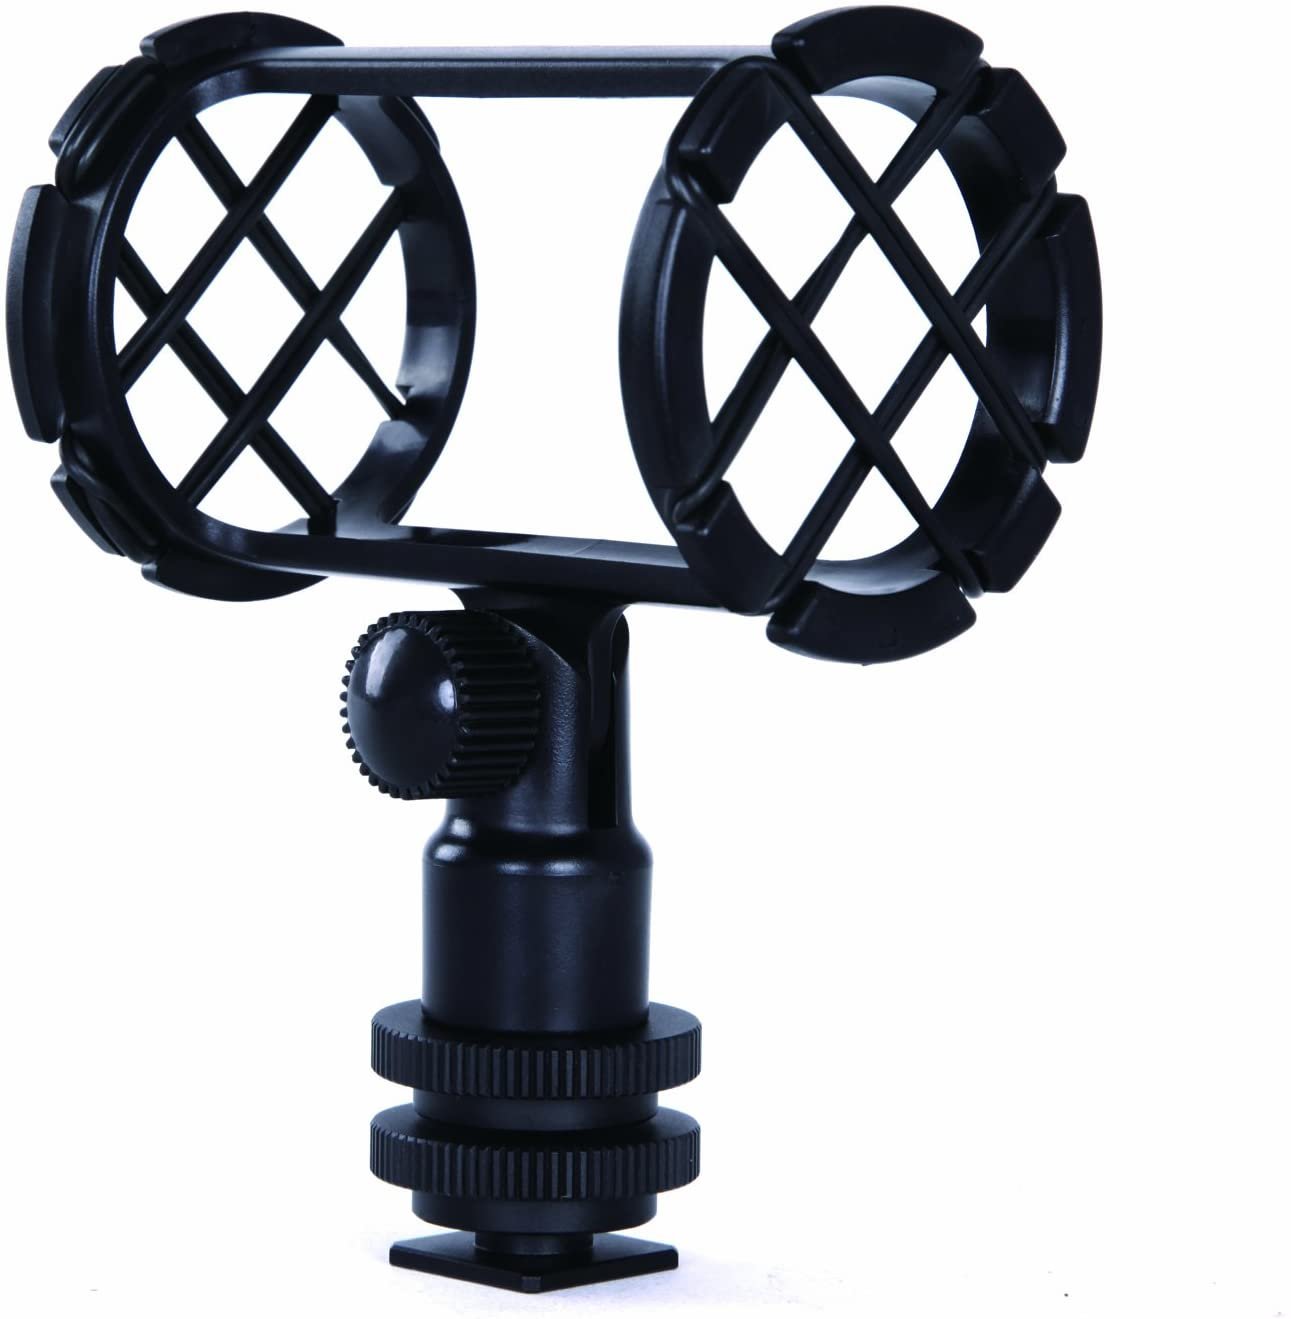 Movo/Sevenoak SMM1 Microphone Shock Mount with Camera Cold Shoe for Shotgun Microphones 19-25mm in Diameter (Including Rode NTG-1, NTG-2, Sennheiser MKE-600)